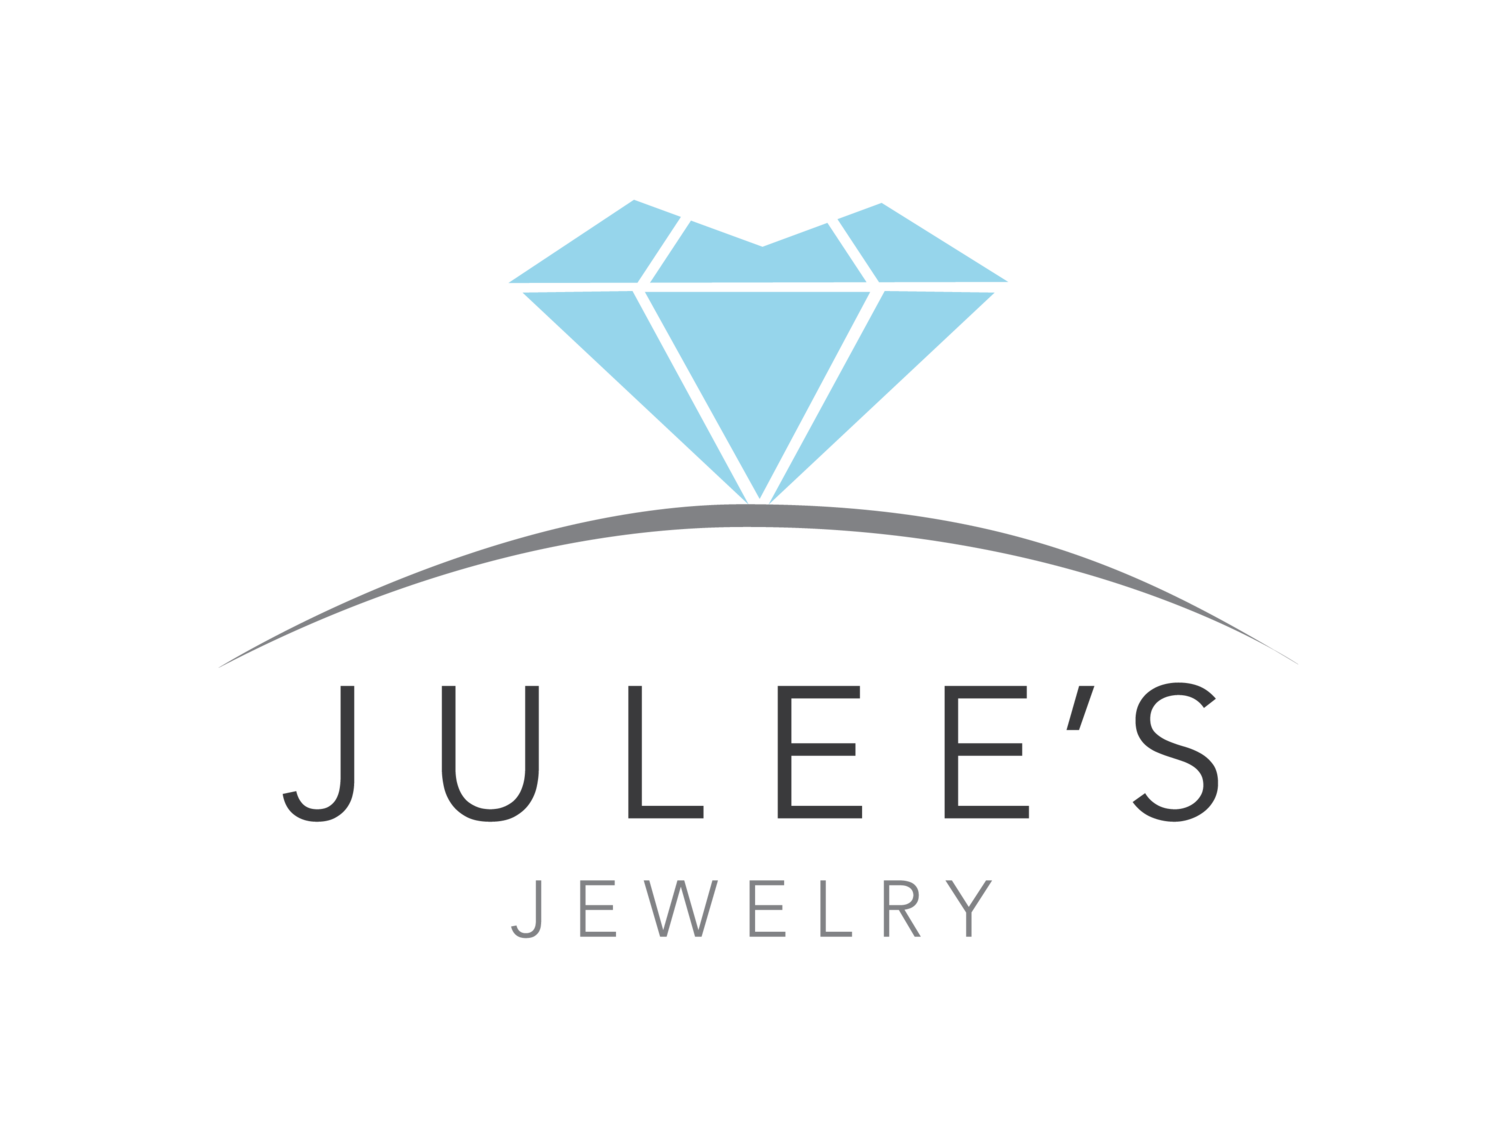 Julee's Jewelry